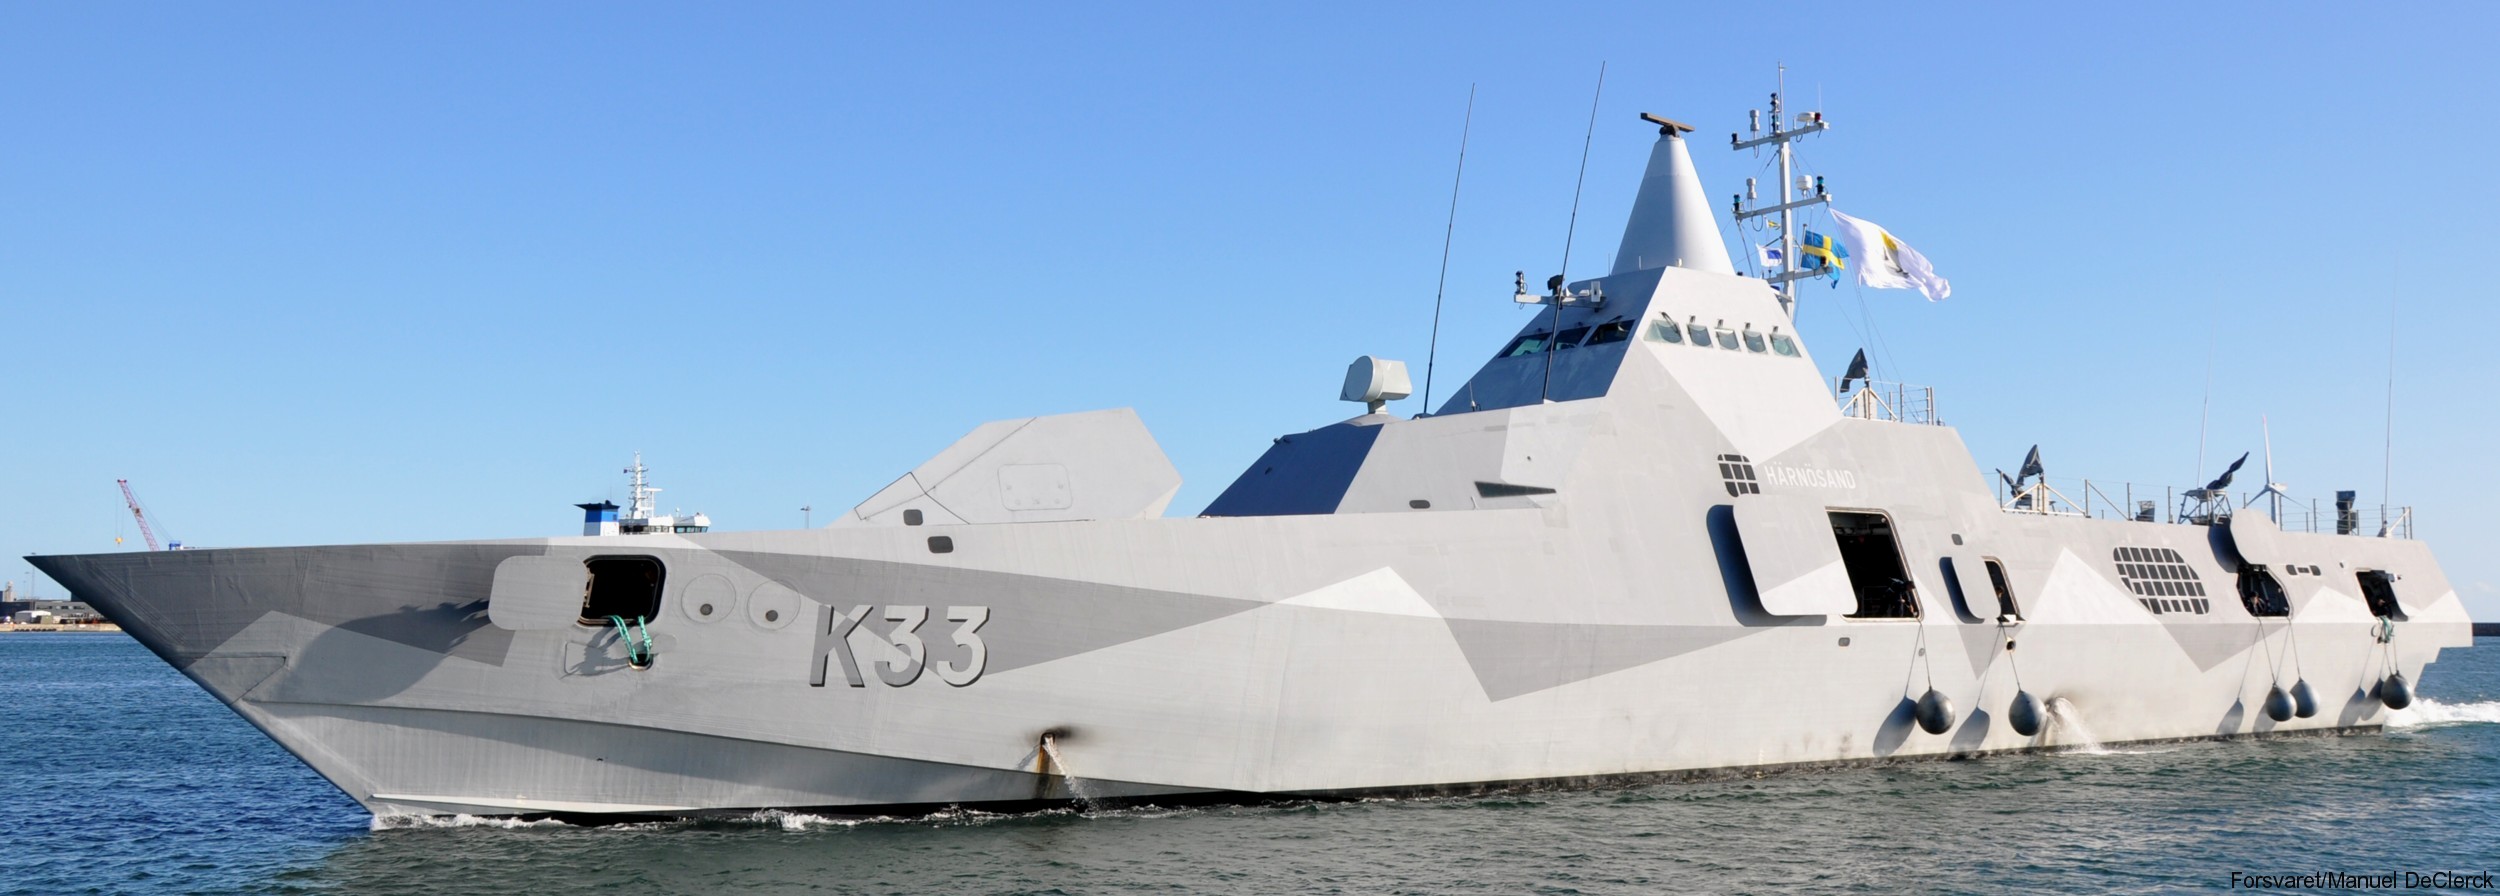 k33 hswms hms harnosand visby class corvette royal swedish navy svenska marinen 10